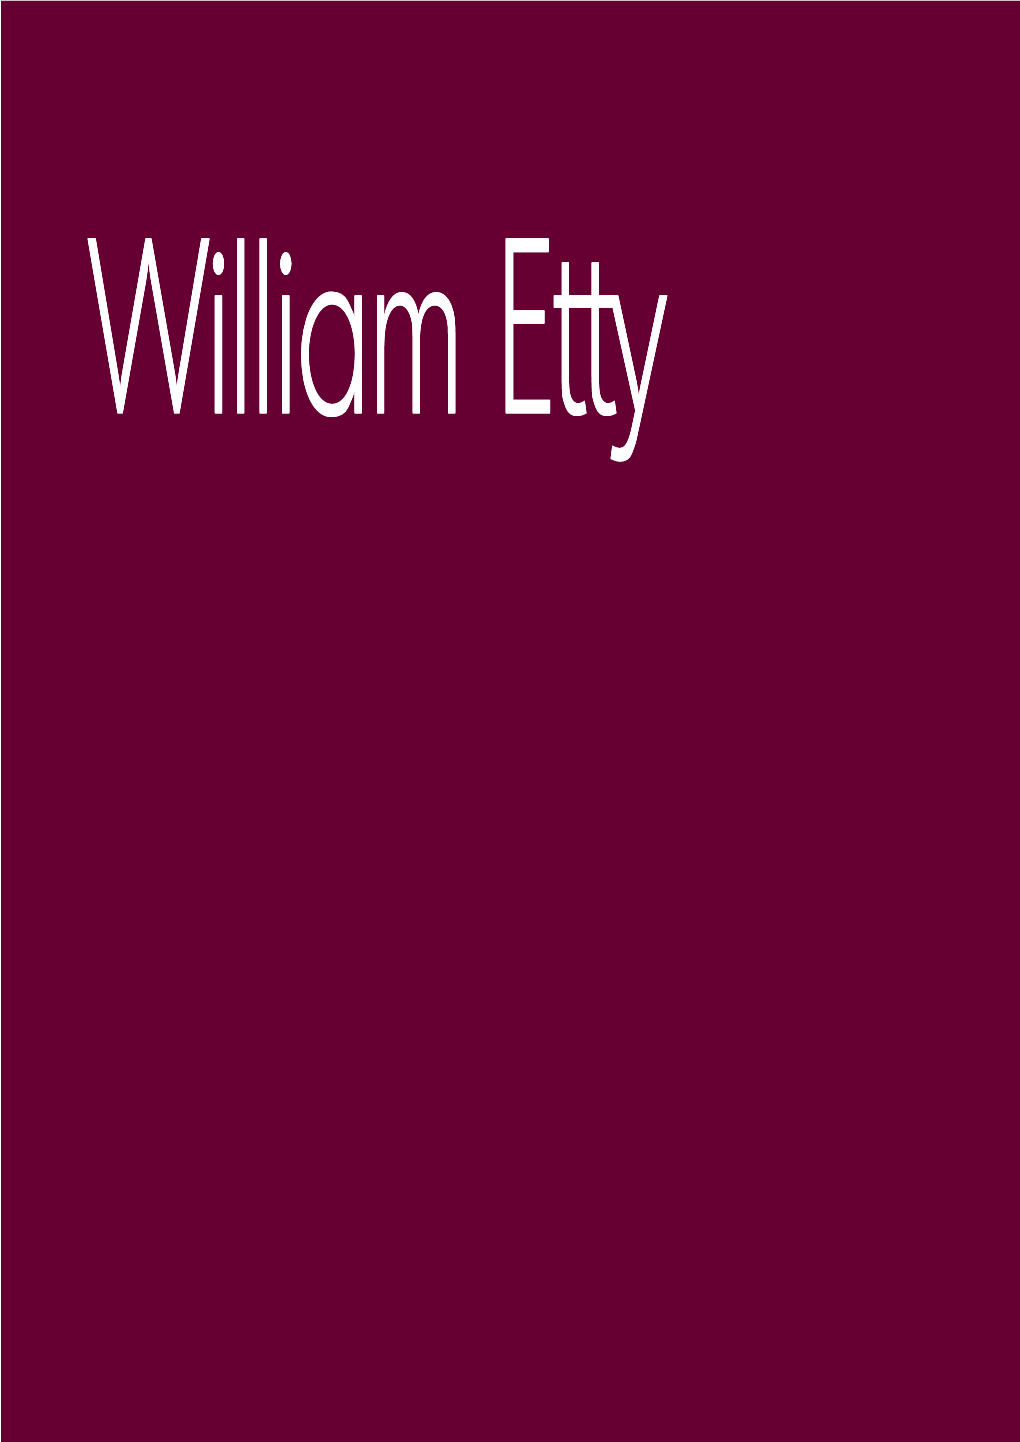 William Etty the Artist